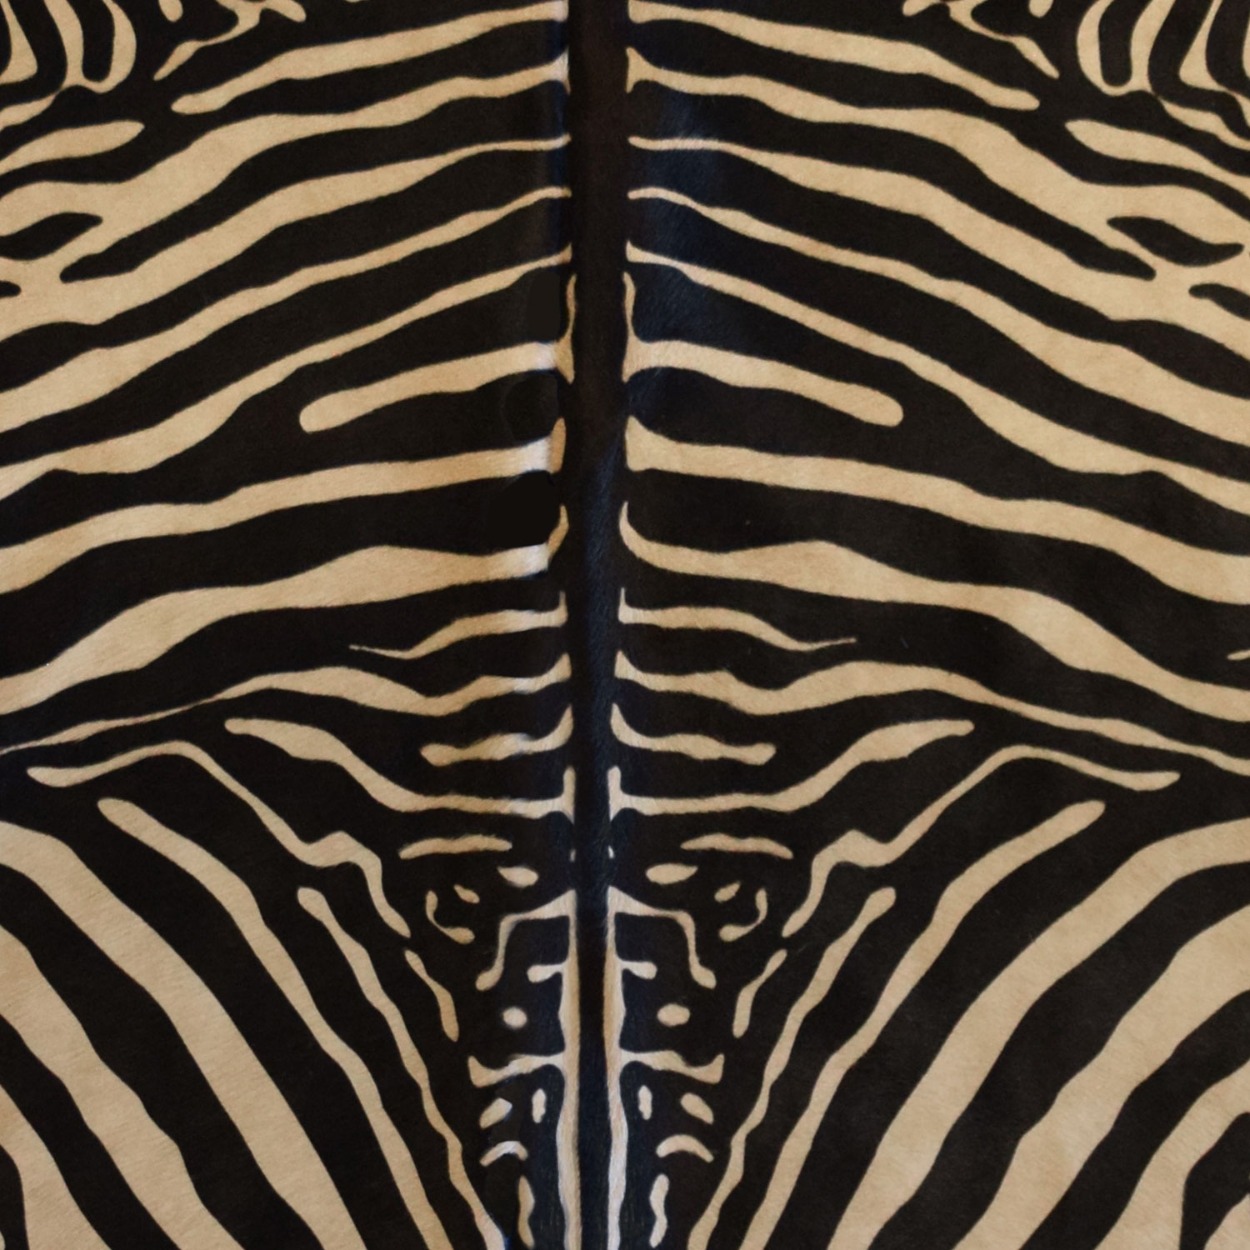 322301 - Safari Printed Detailed Zebra Print on Off-White Cowhide